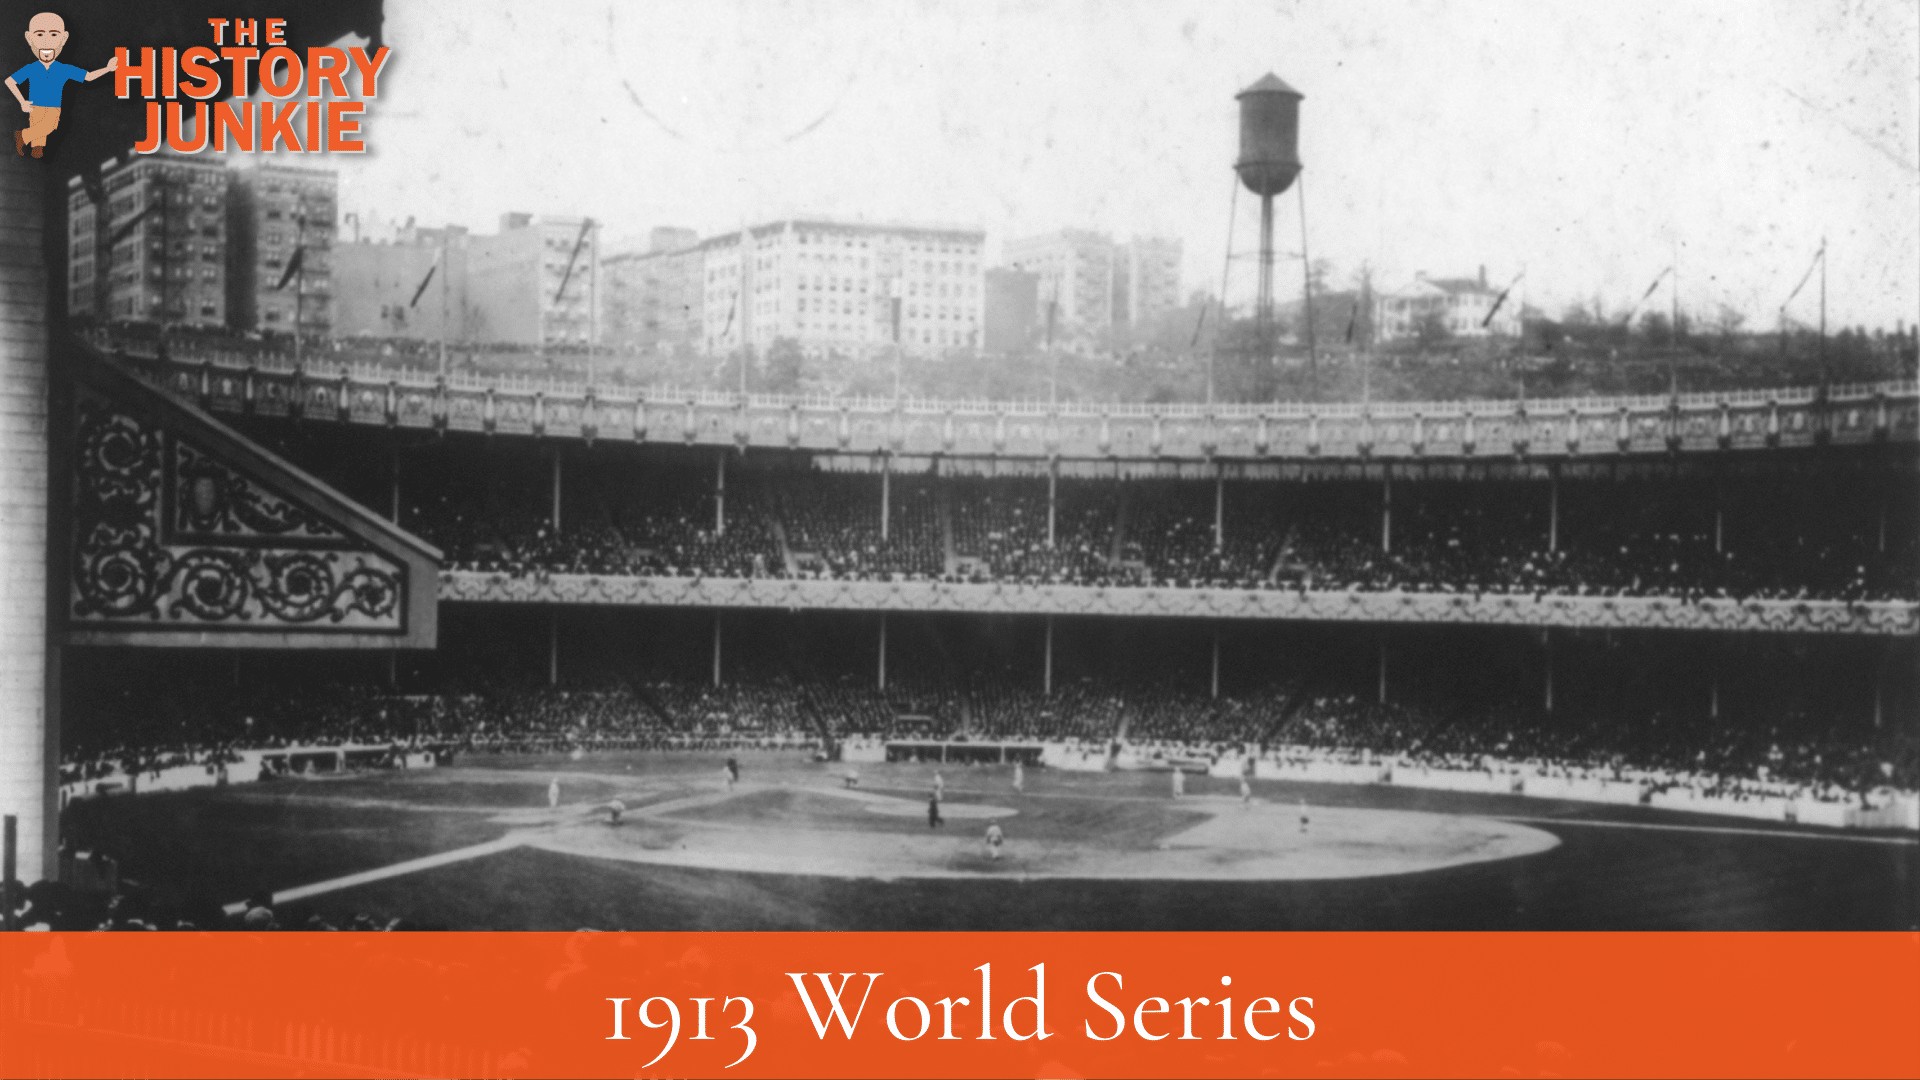 1913 World Series